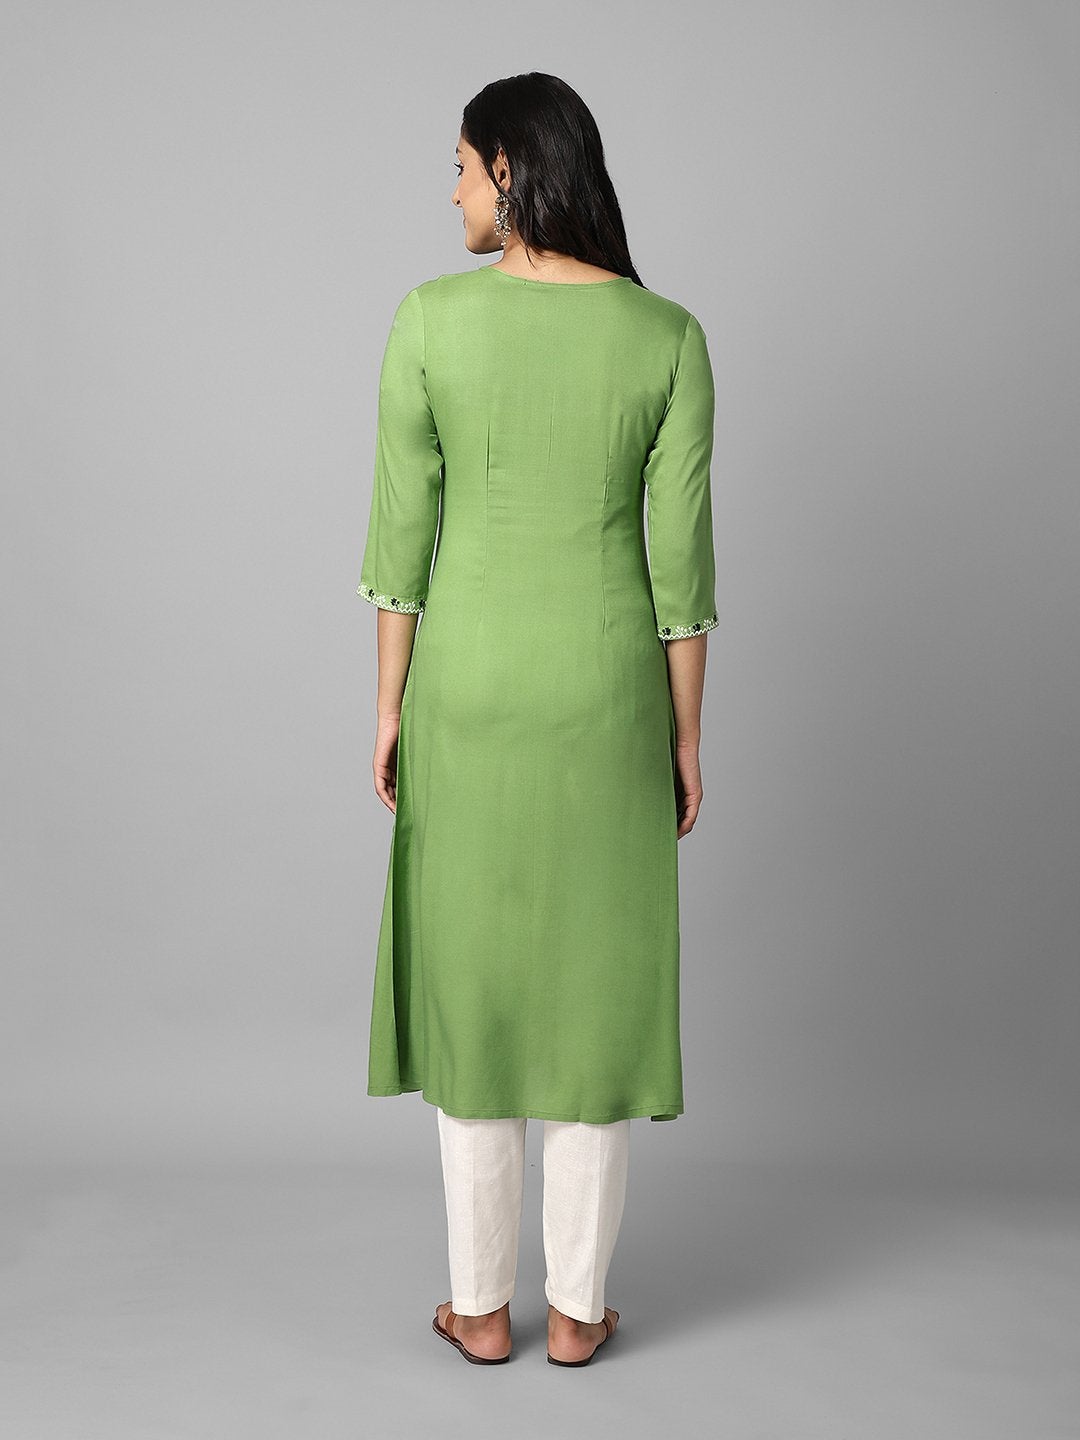 Women's Solid Green Embroidered A-Line Kurta - Azira